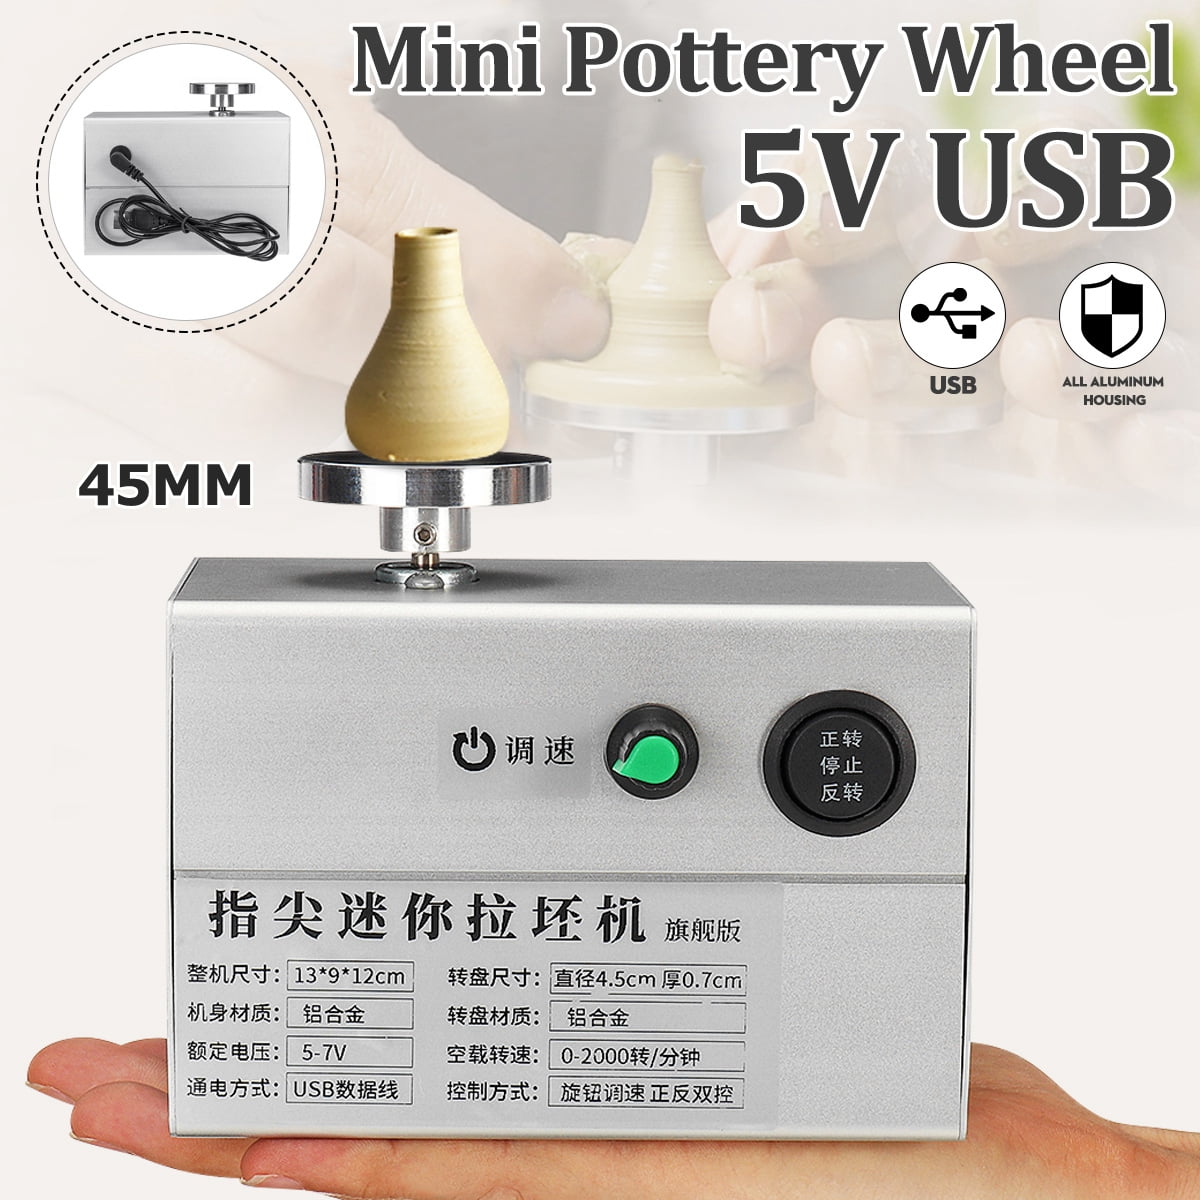 5V USB Mini Electric Pottery Wheel Machine Ceramic Clay Art Craft Work Tool 